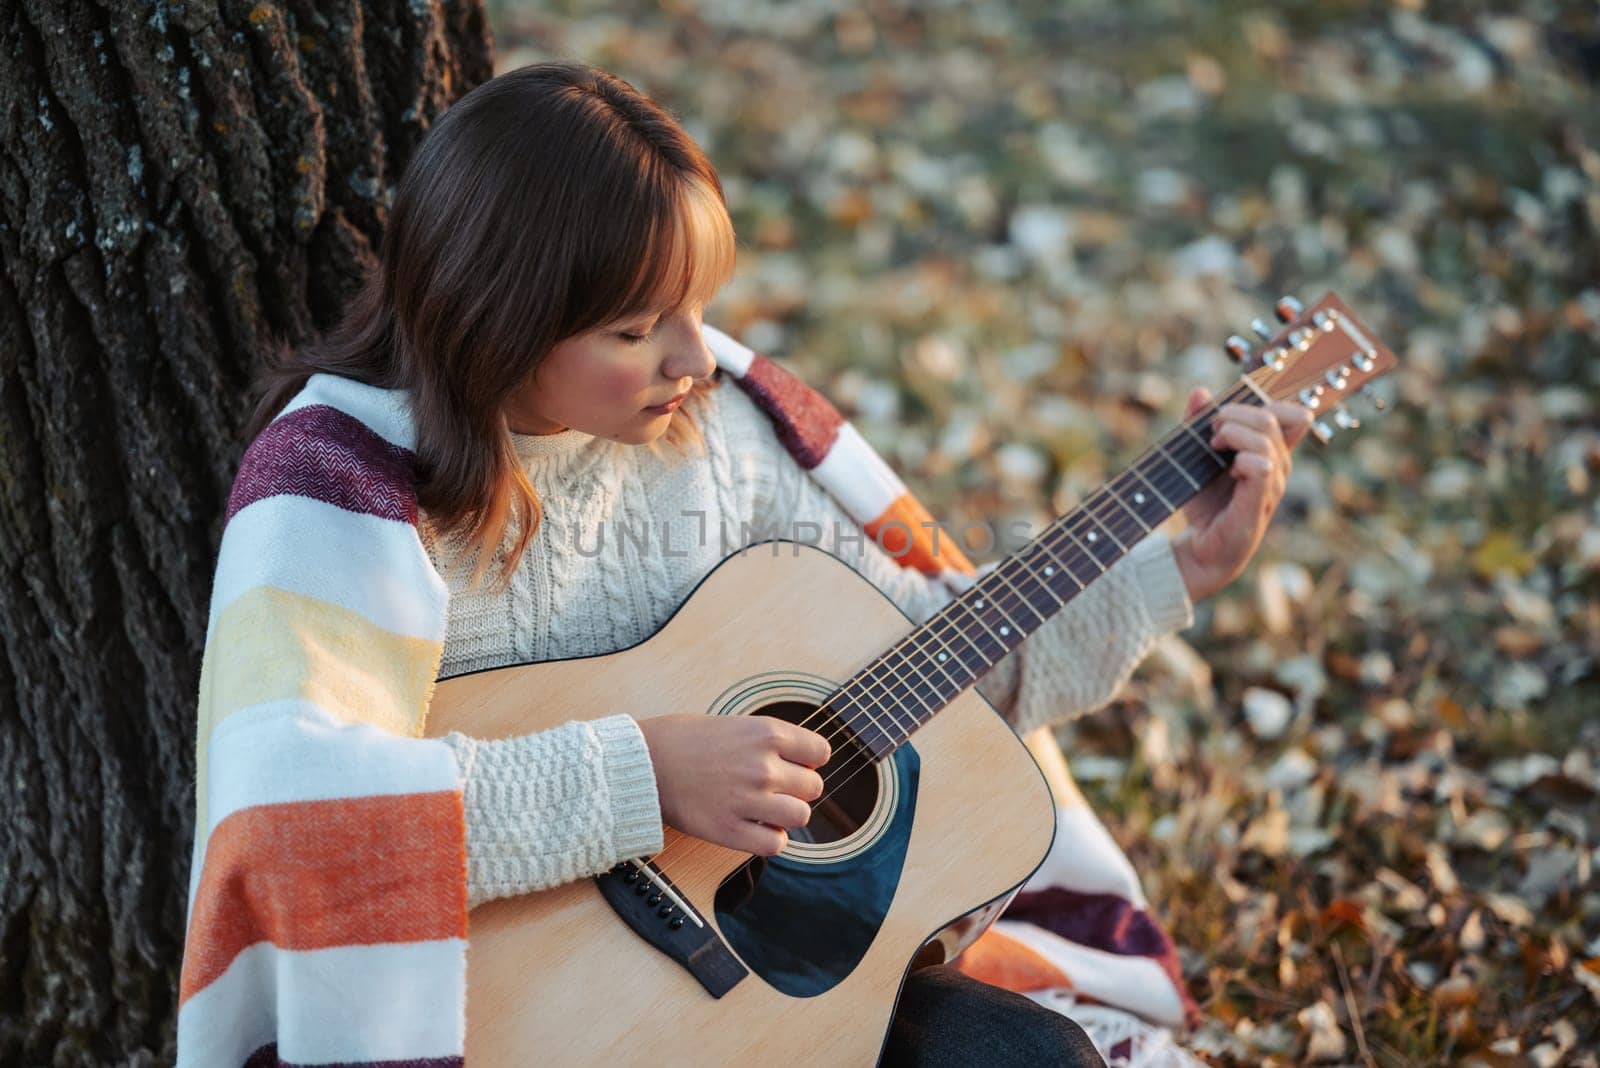 Beautiful evening shot of a girl musician outdoors in autumn nature